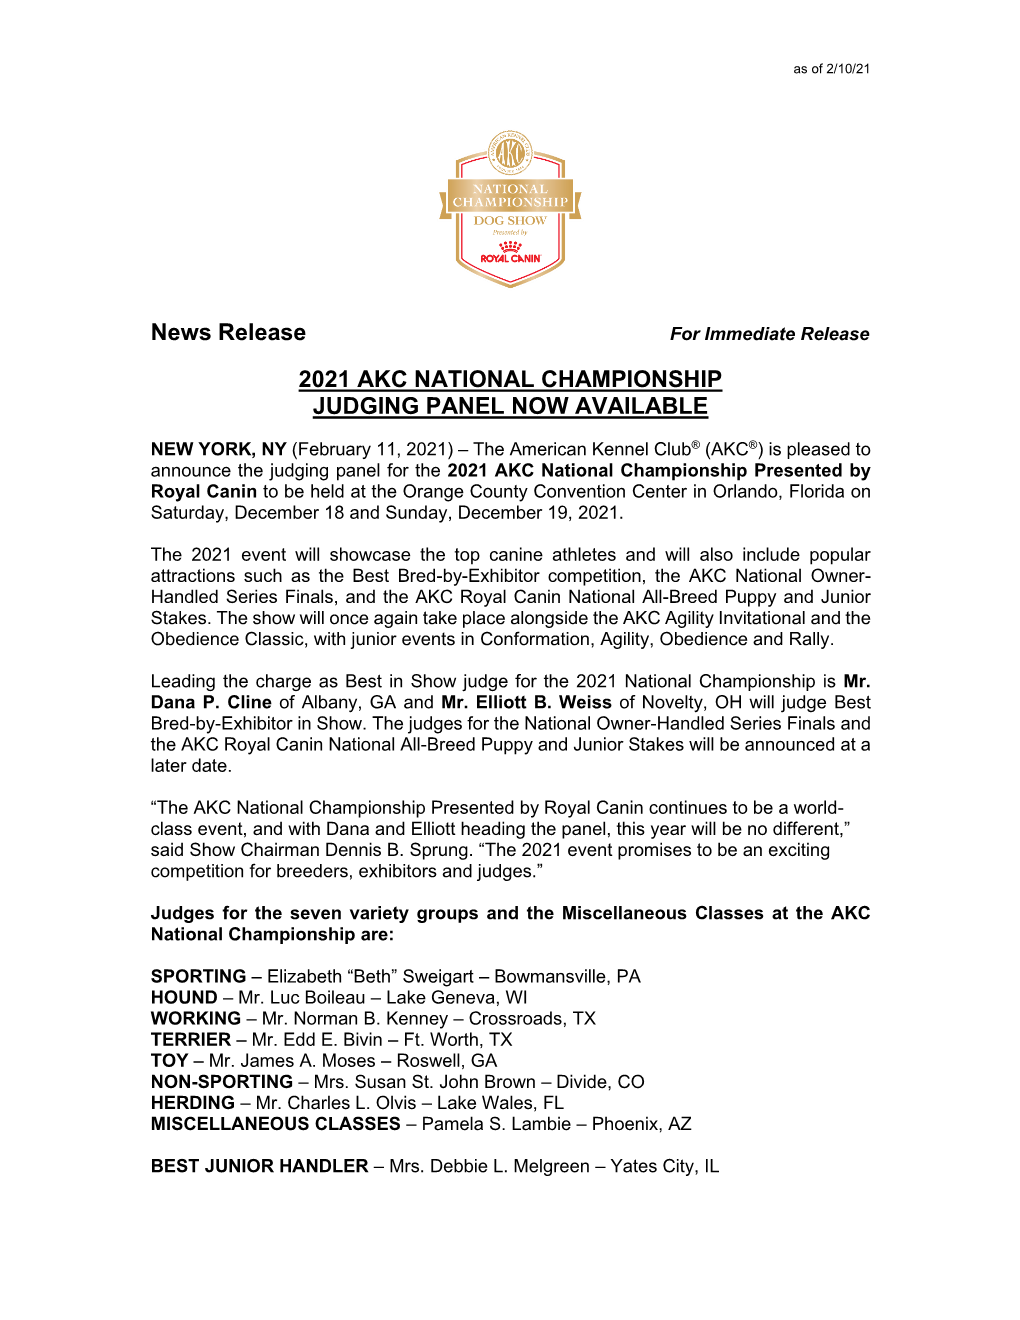 News Release 2021 AKC NATIONAL CHAMPIONSHIP JUDGING PANEL